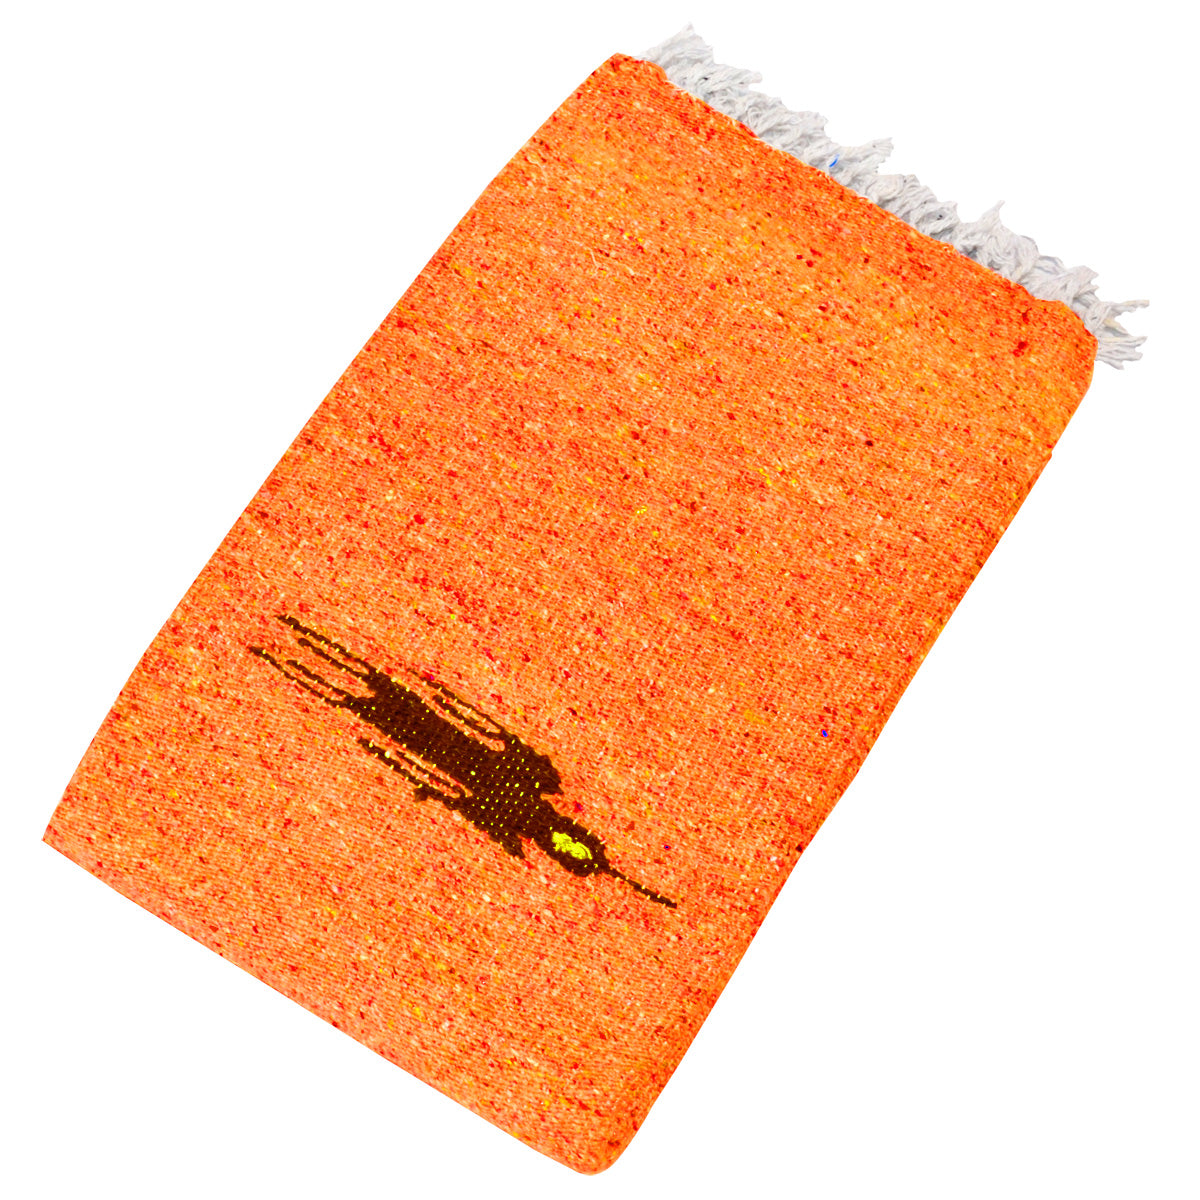 Thunderbird Supreme Mexican Yoga Blanket – Yoga Accessories